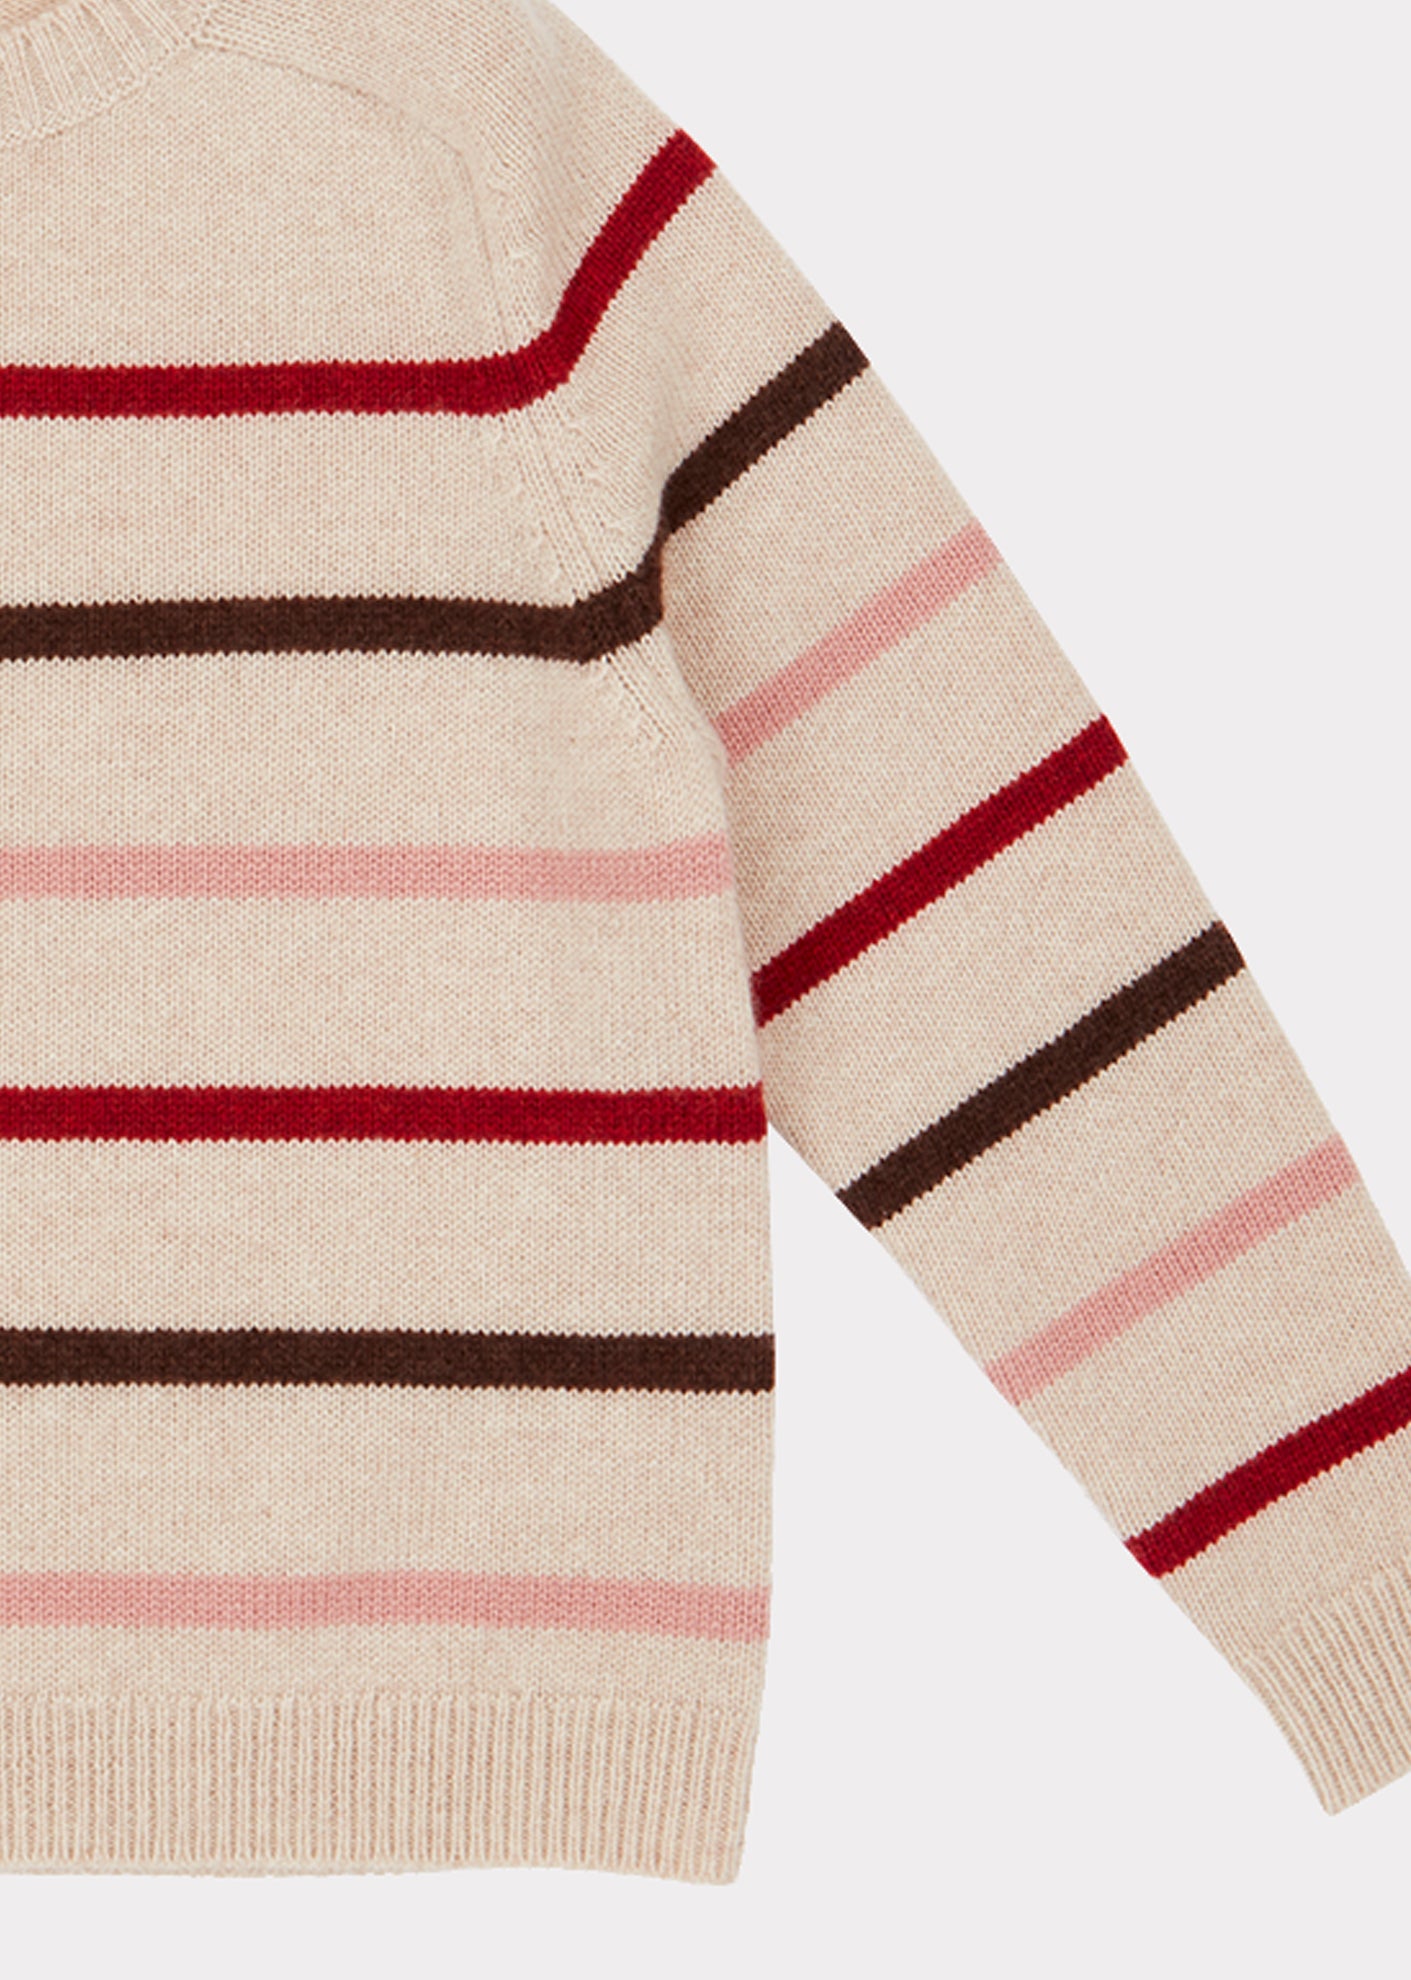 Boys & Girls Khaki Stripe Cashmere Sweater